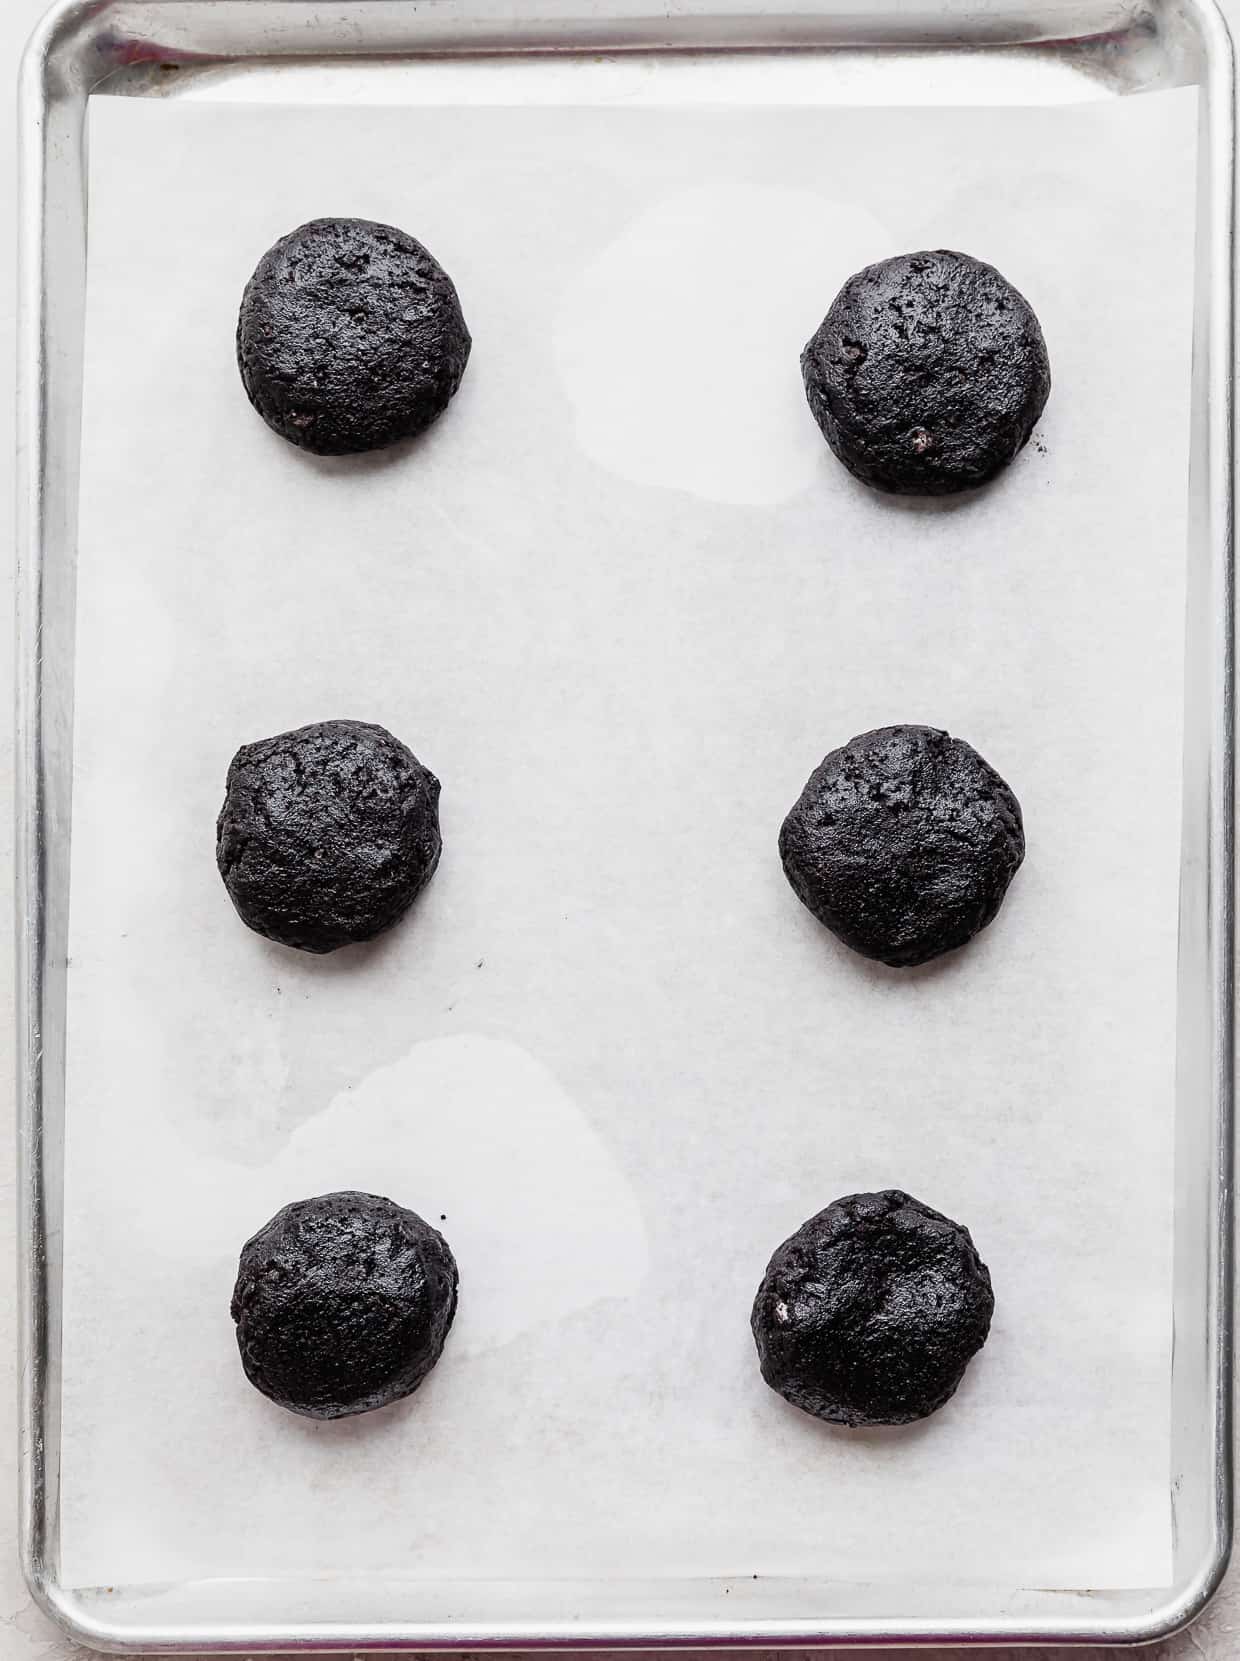 Six black Oreo cookie dough balls on a white parchment paper.